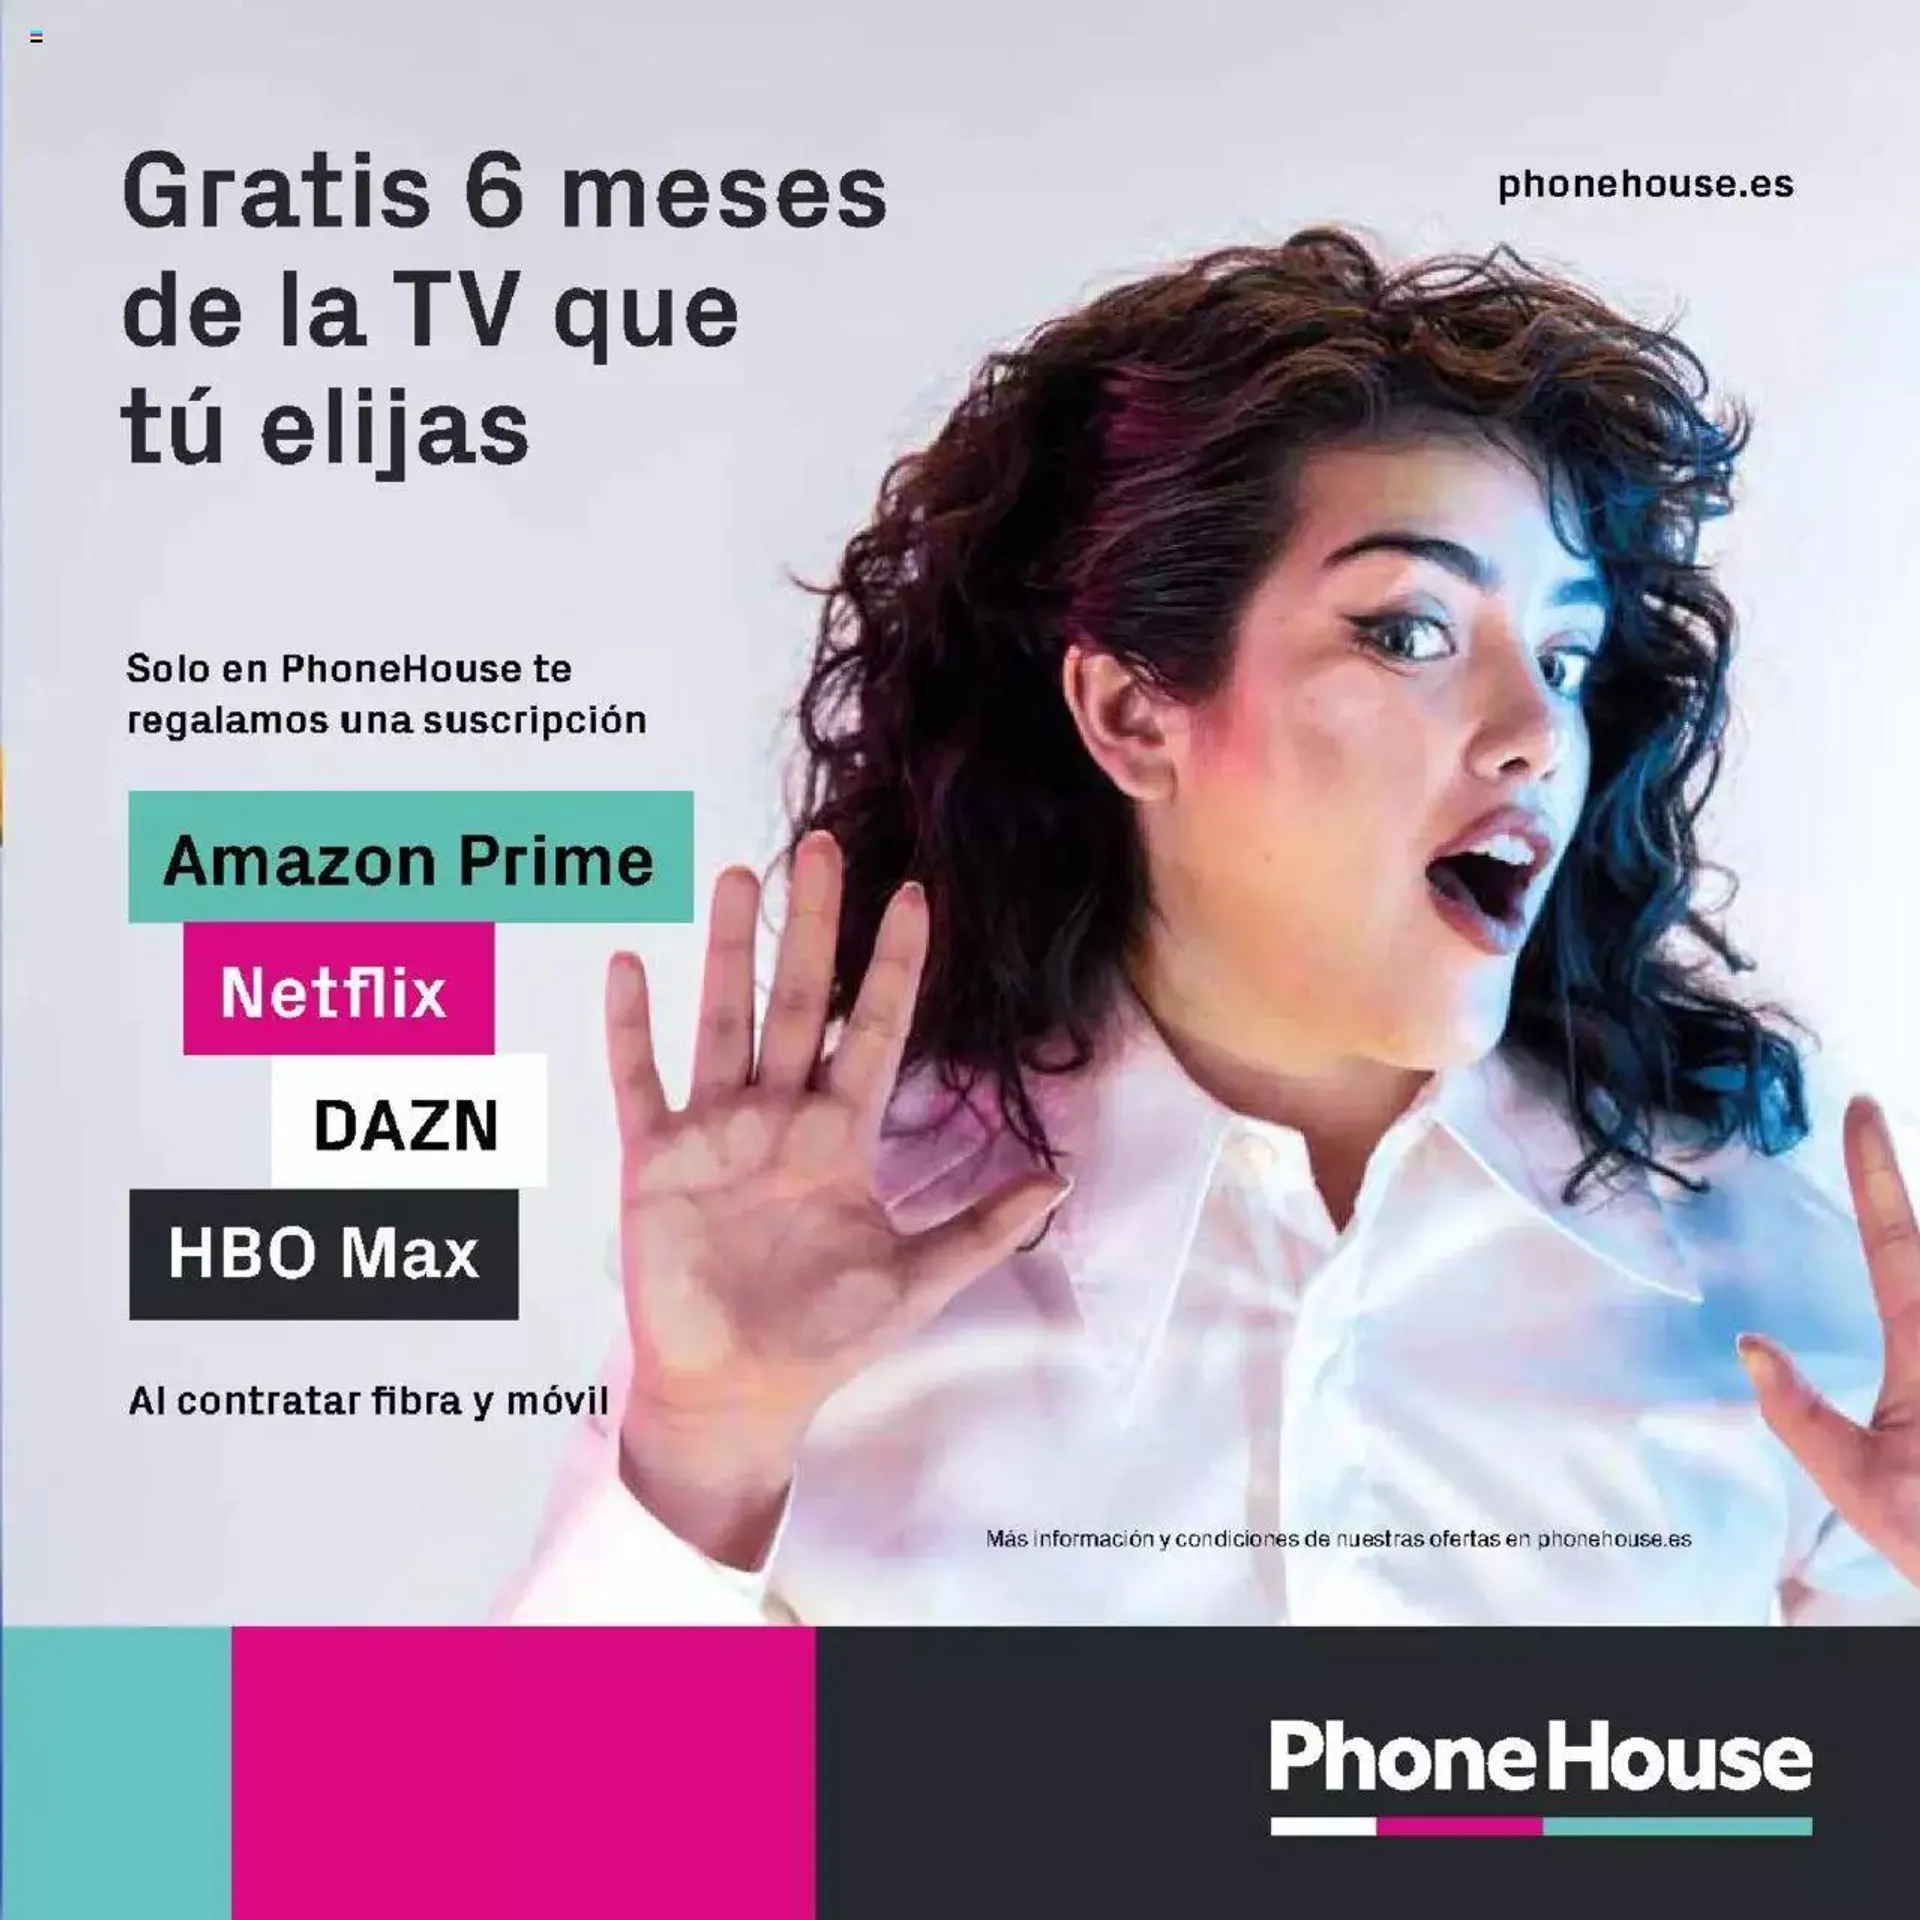 The Phone House folleto